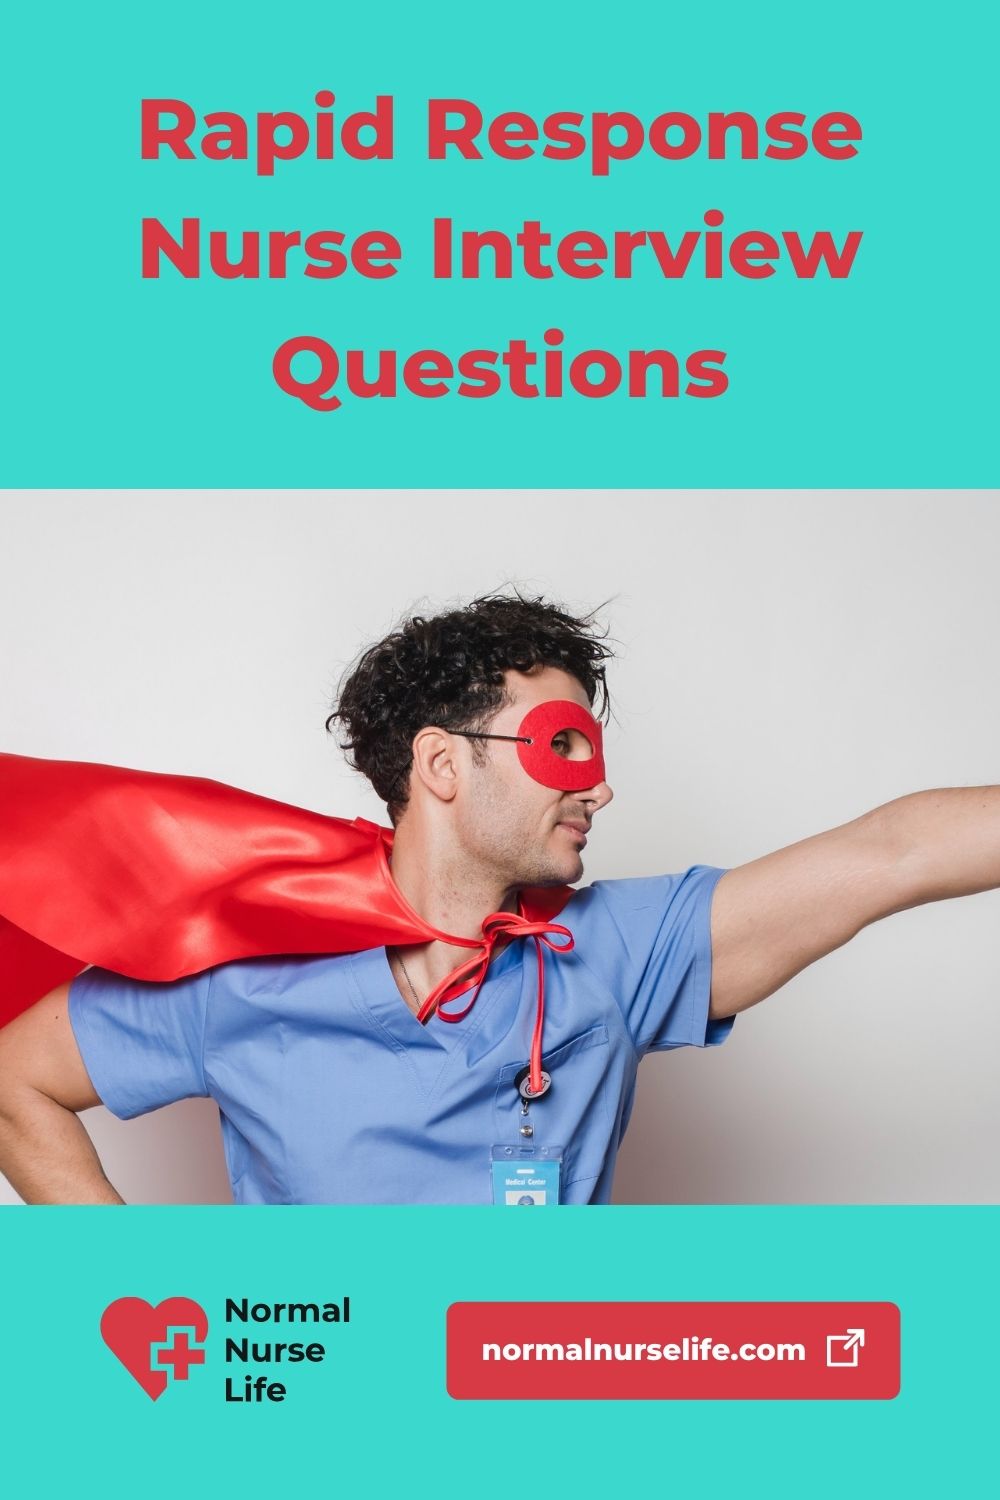 Interview questions for rapid response nurses